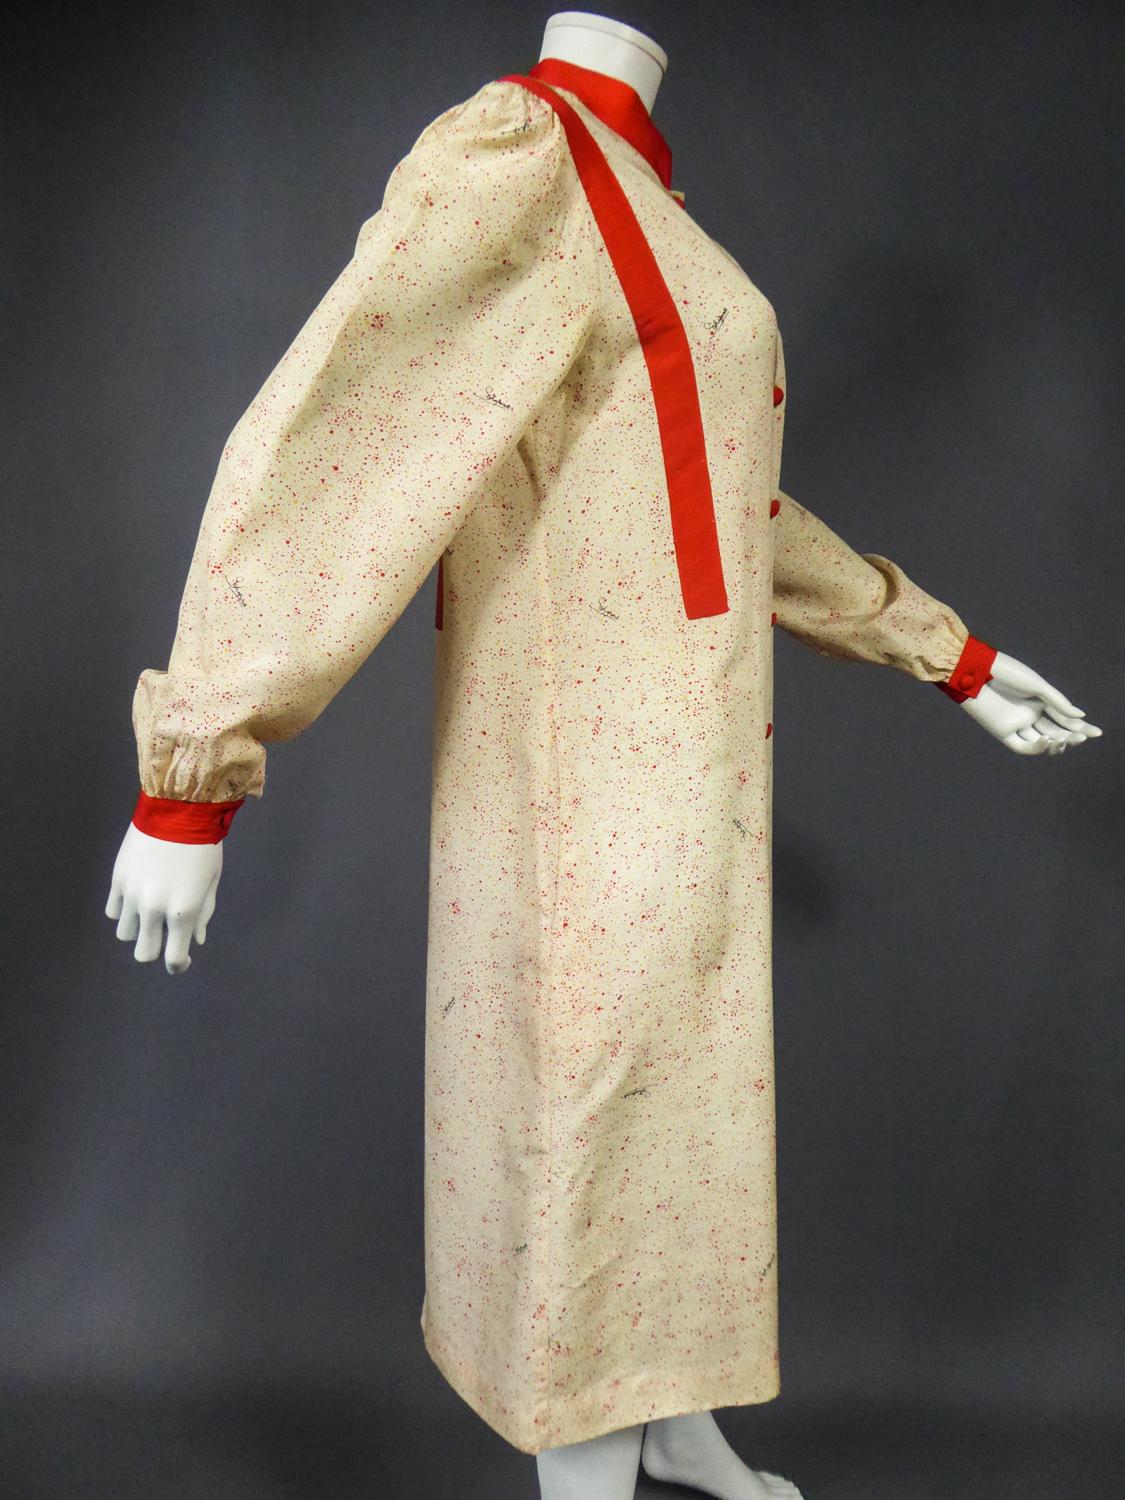 A Schiaparelli Printed Silk Blouse Dress Circa 2006-2012 For Sale 6